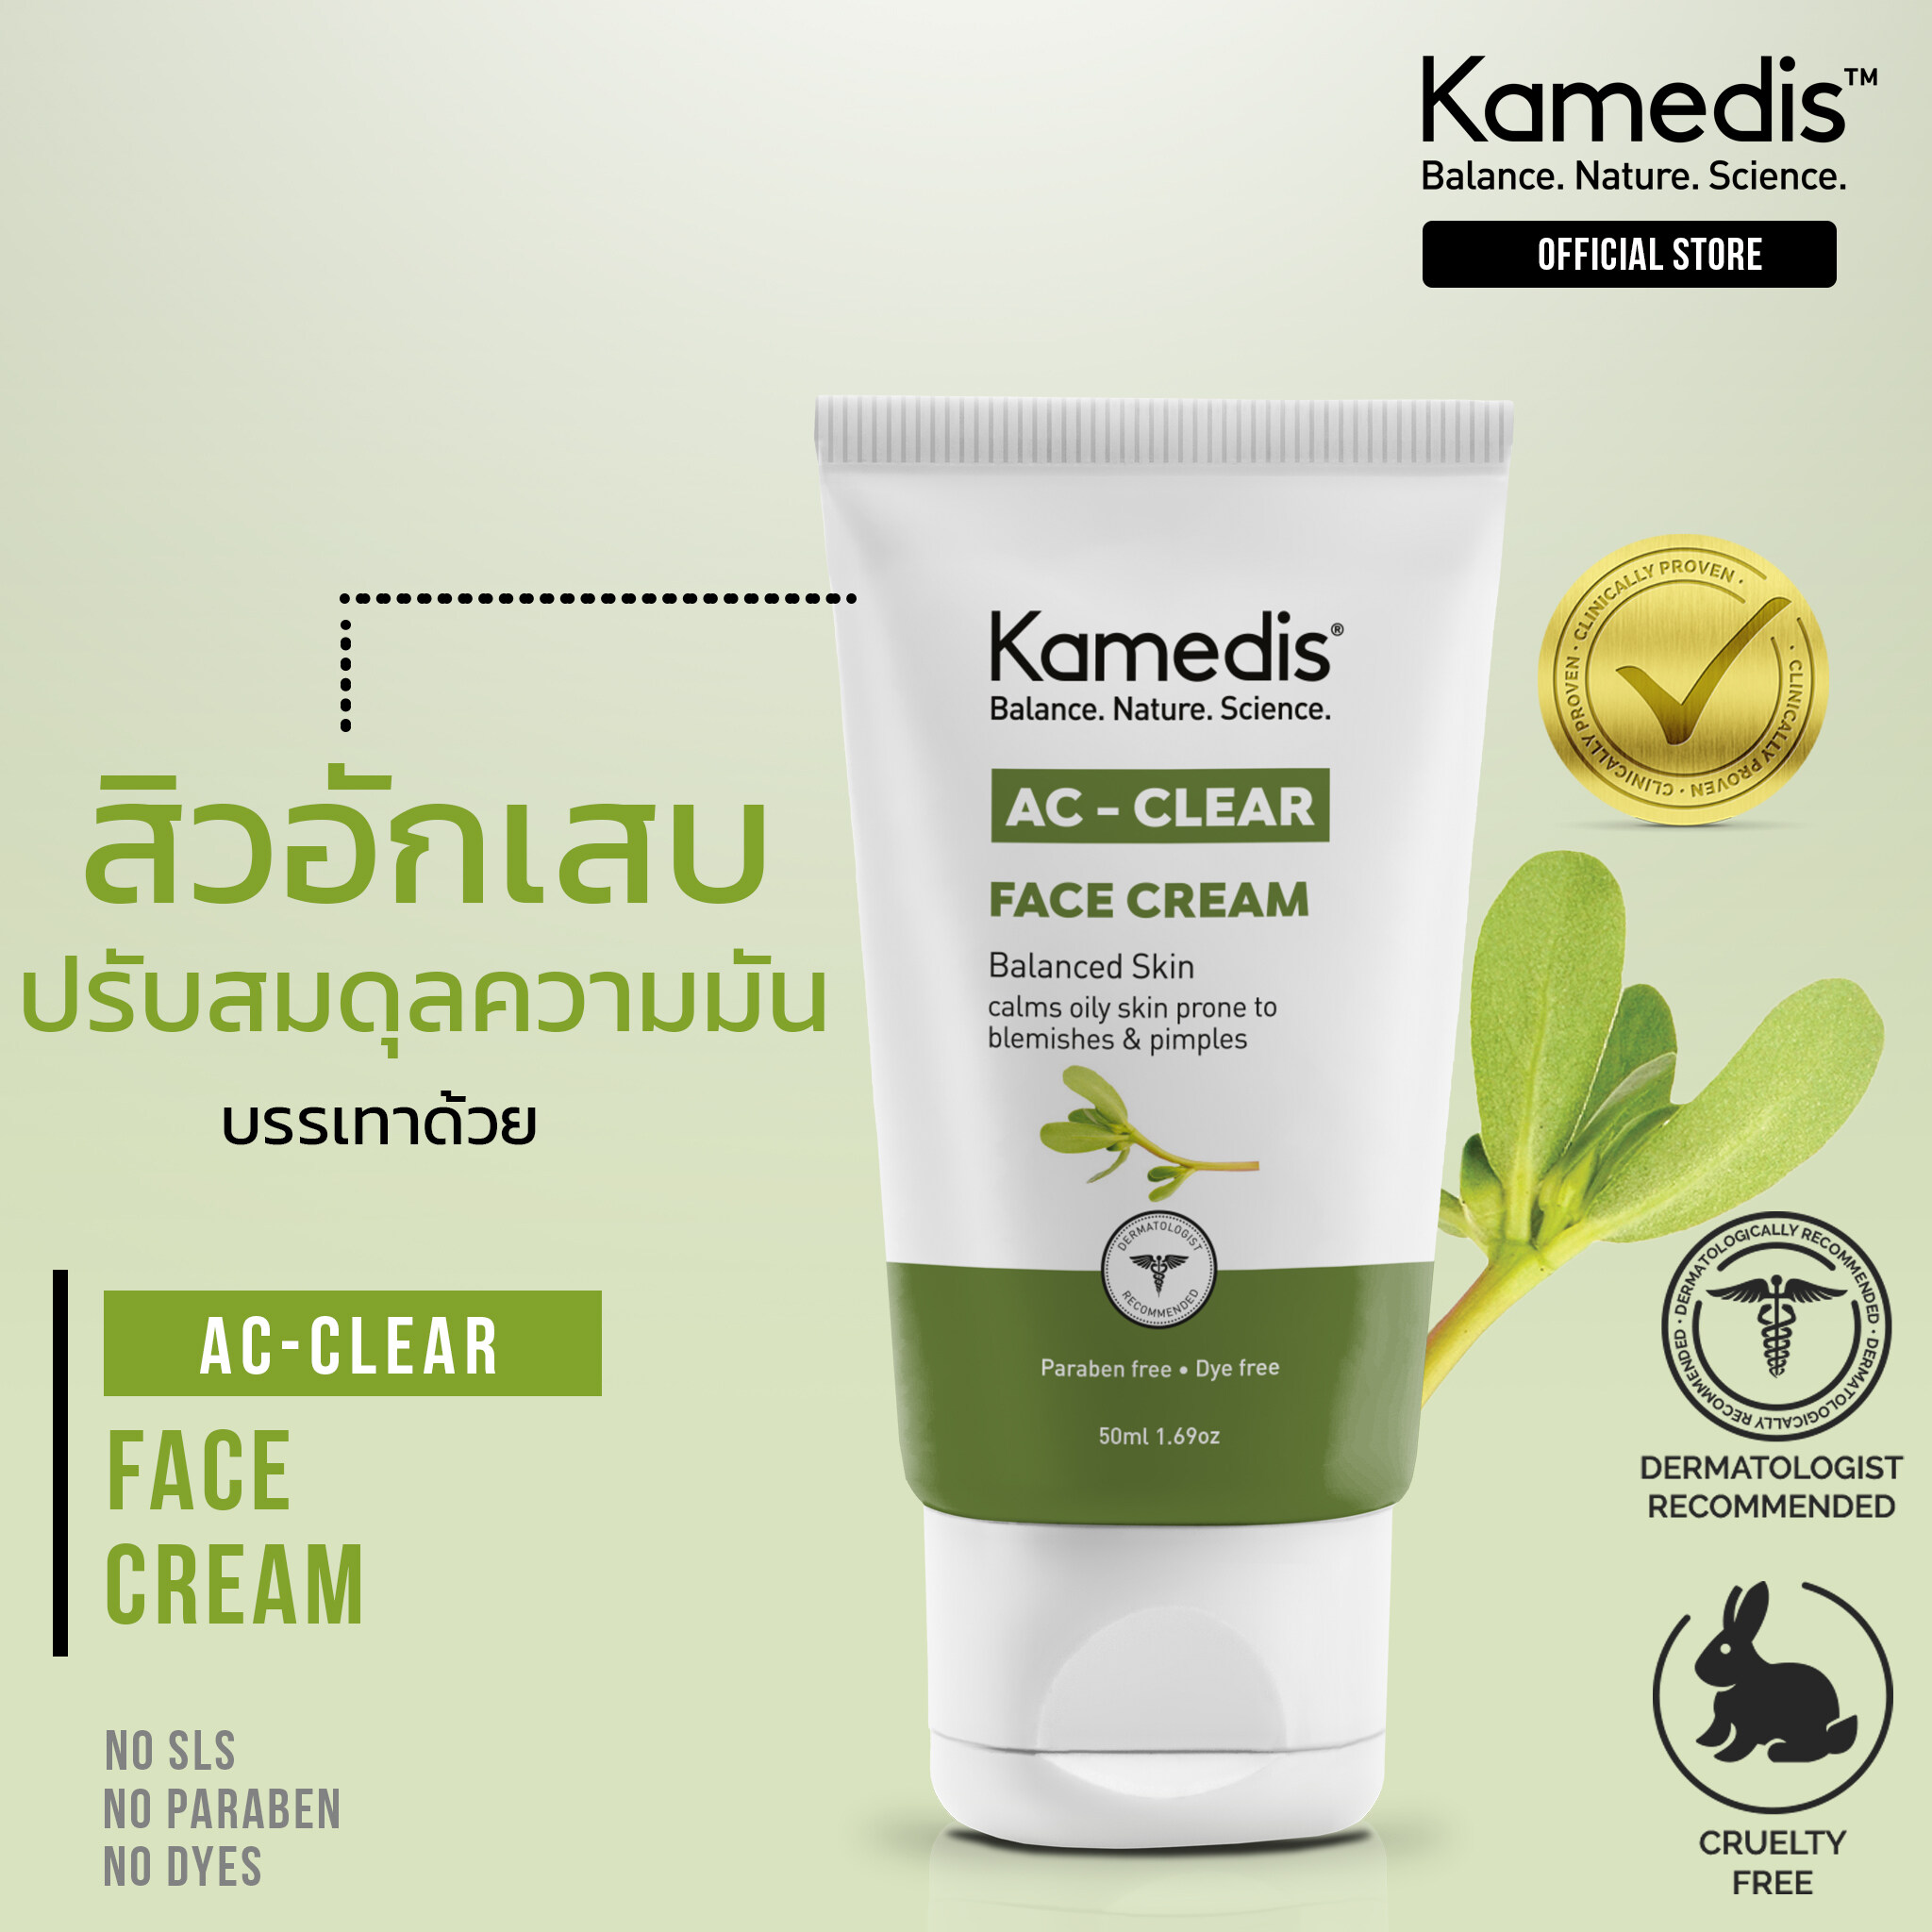 Kamedis AC-CLEAR Face Cream 50ml บำรุงผิวหน้า ช่วยลดสิว สิวอุดตัน สิวอักเสบ ควบคุมความมัน